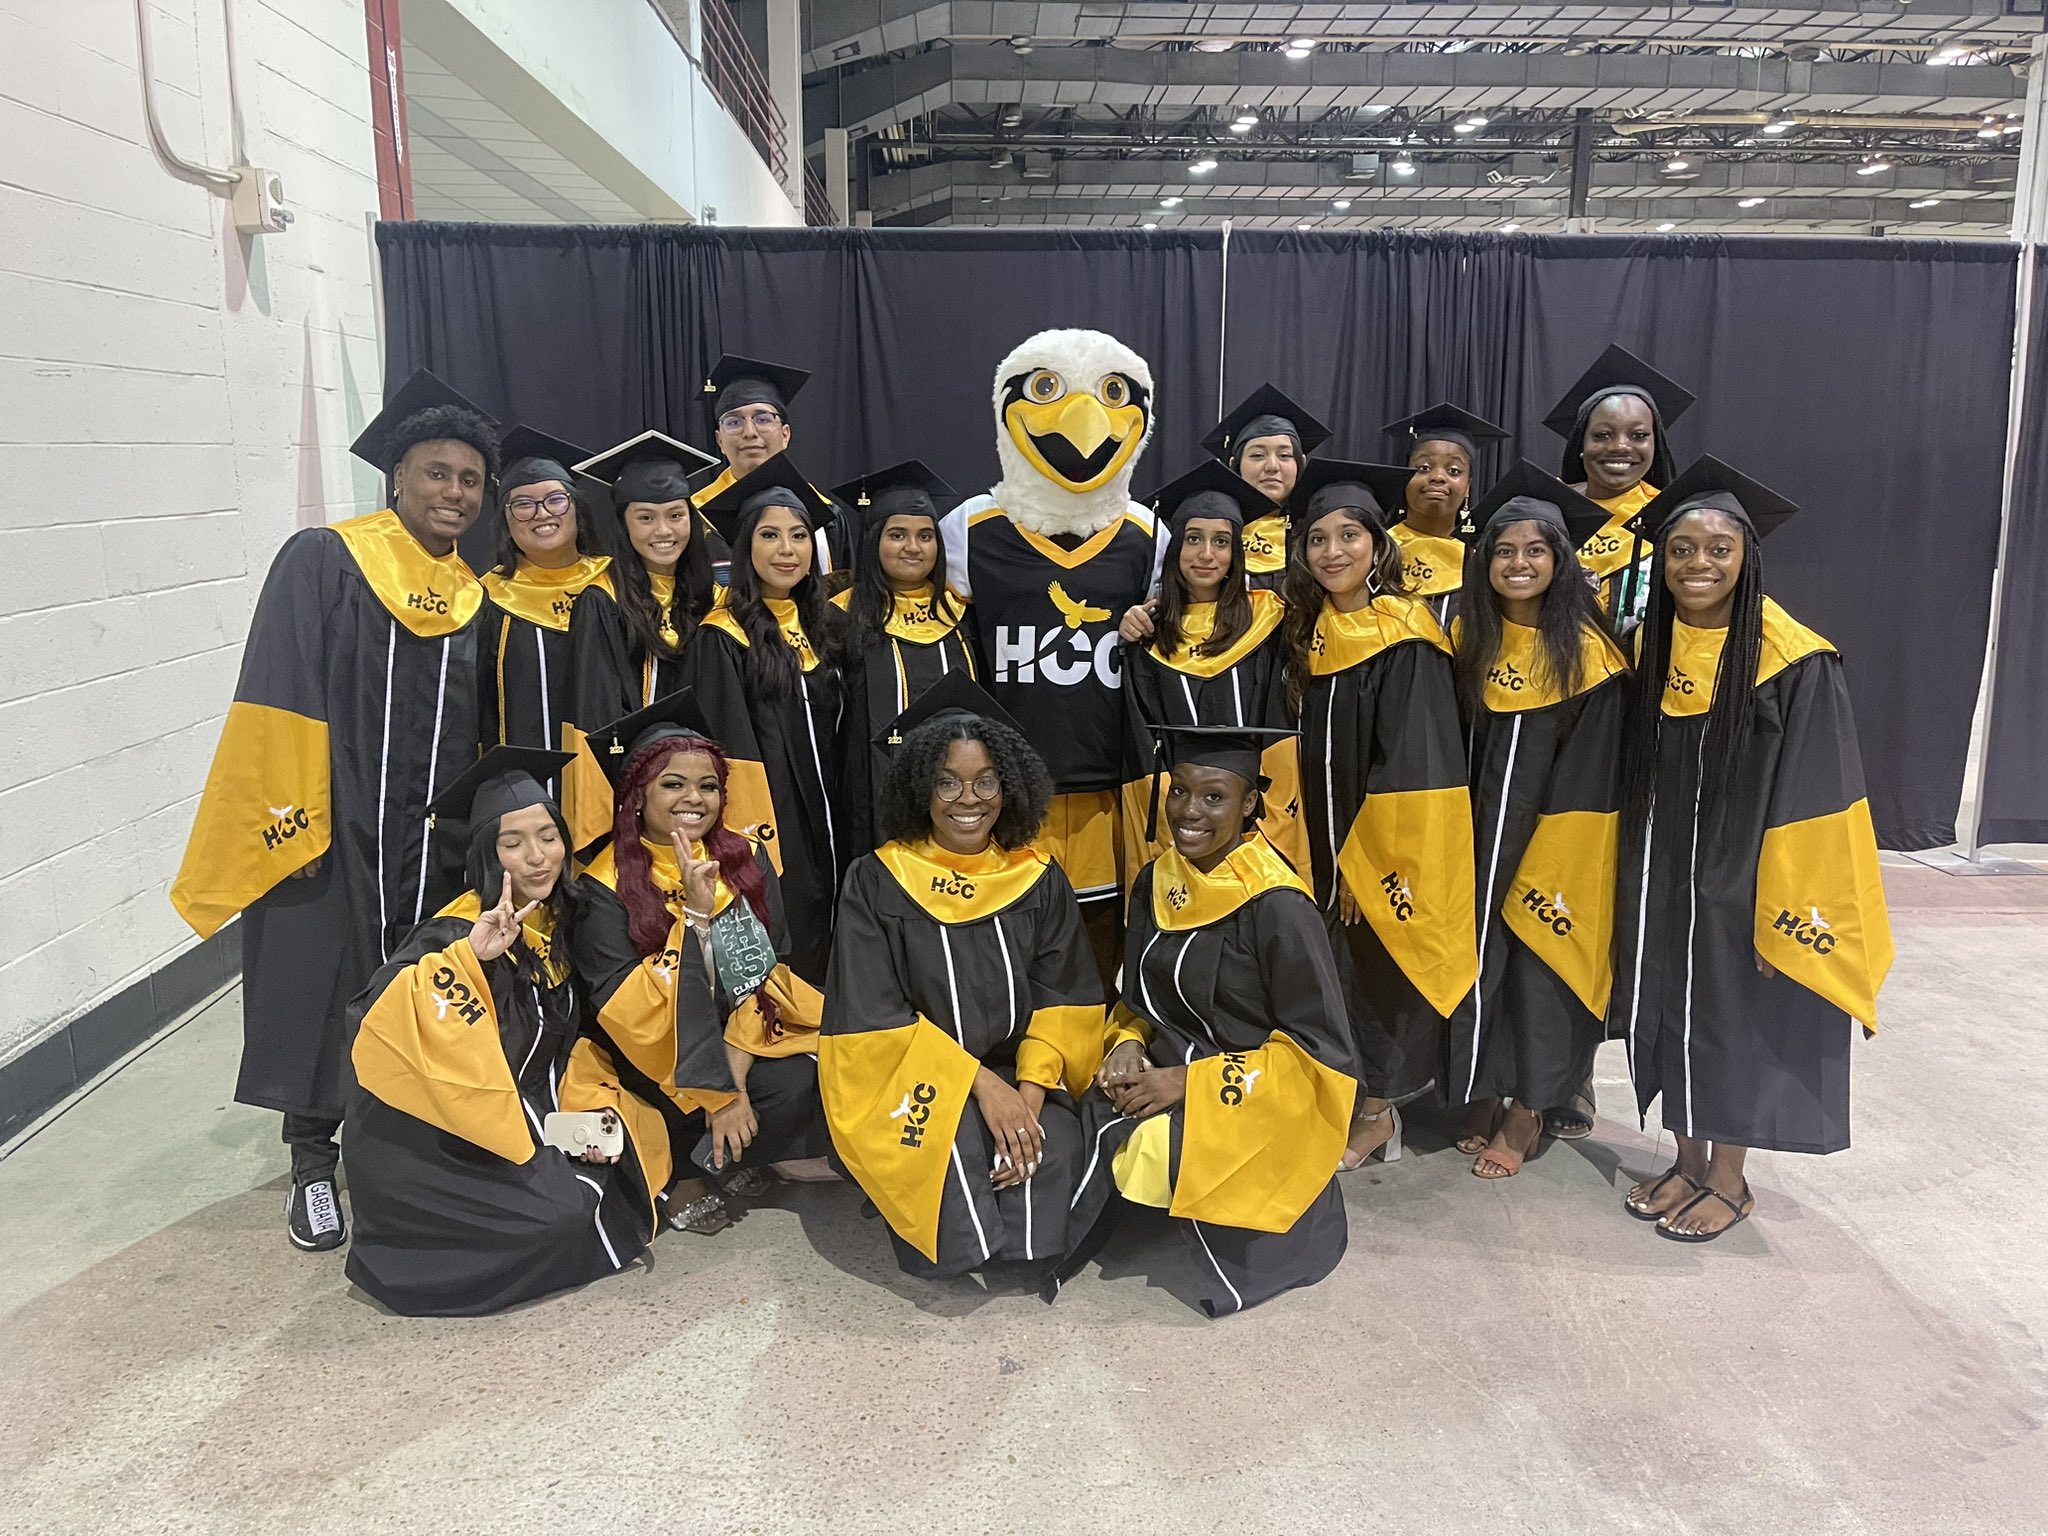 Hightower High School on Twitter "It’s finally here 🙌🏾 HCC Graduation